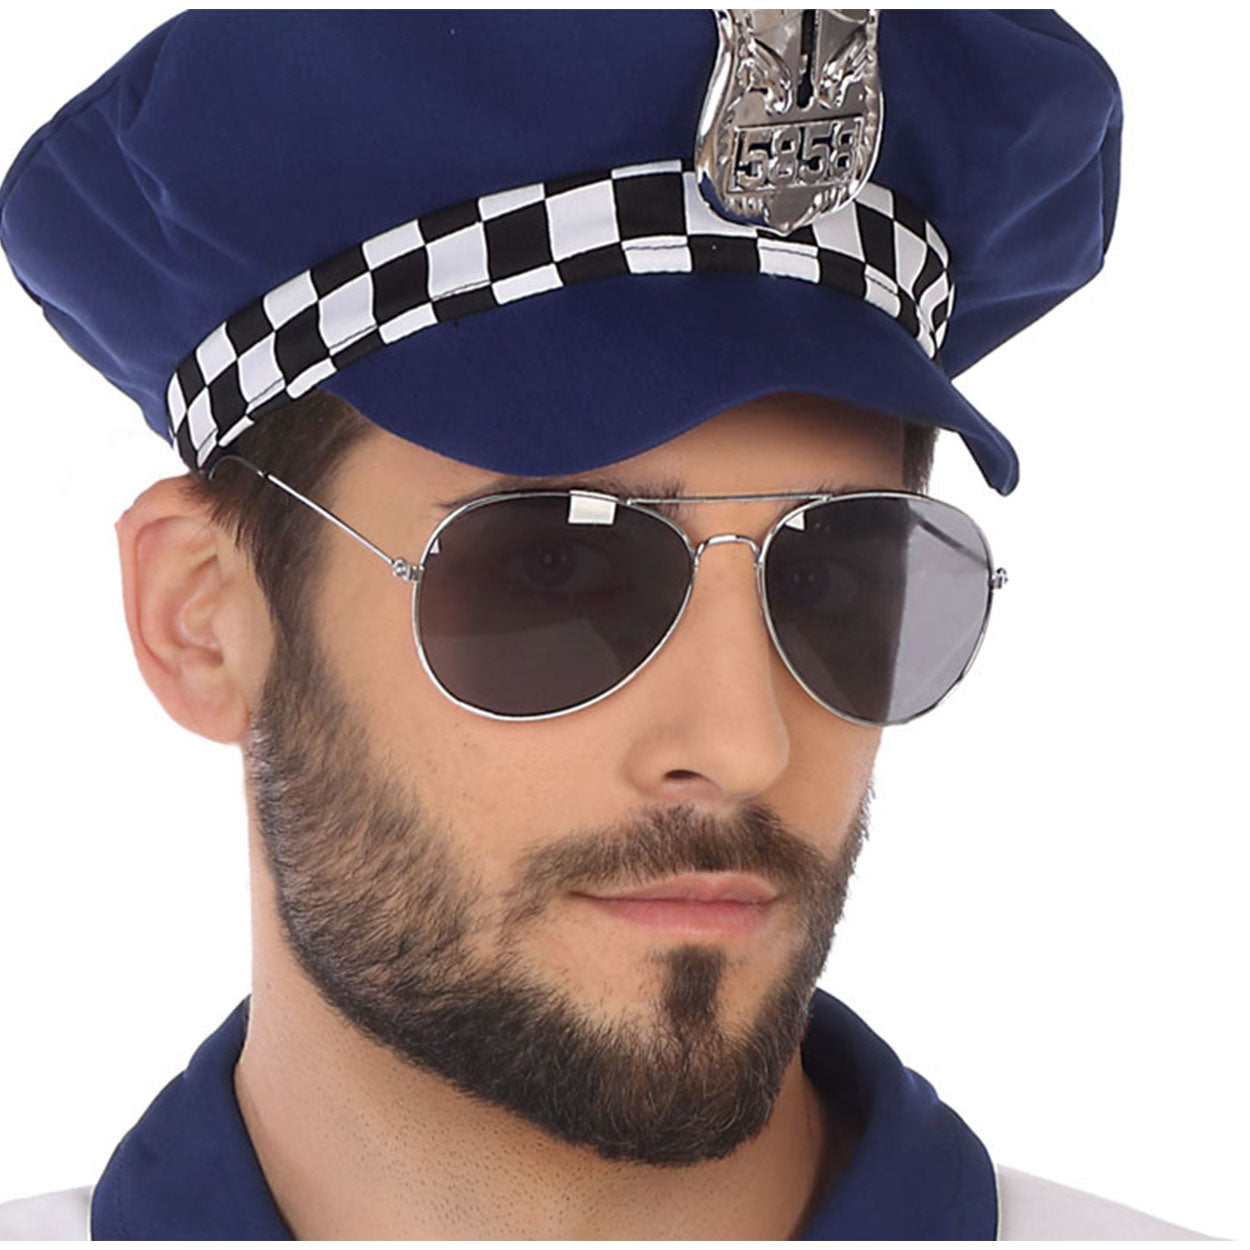 Occhiali tipo Ray-Ban vintage Poliziotto